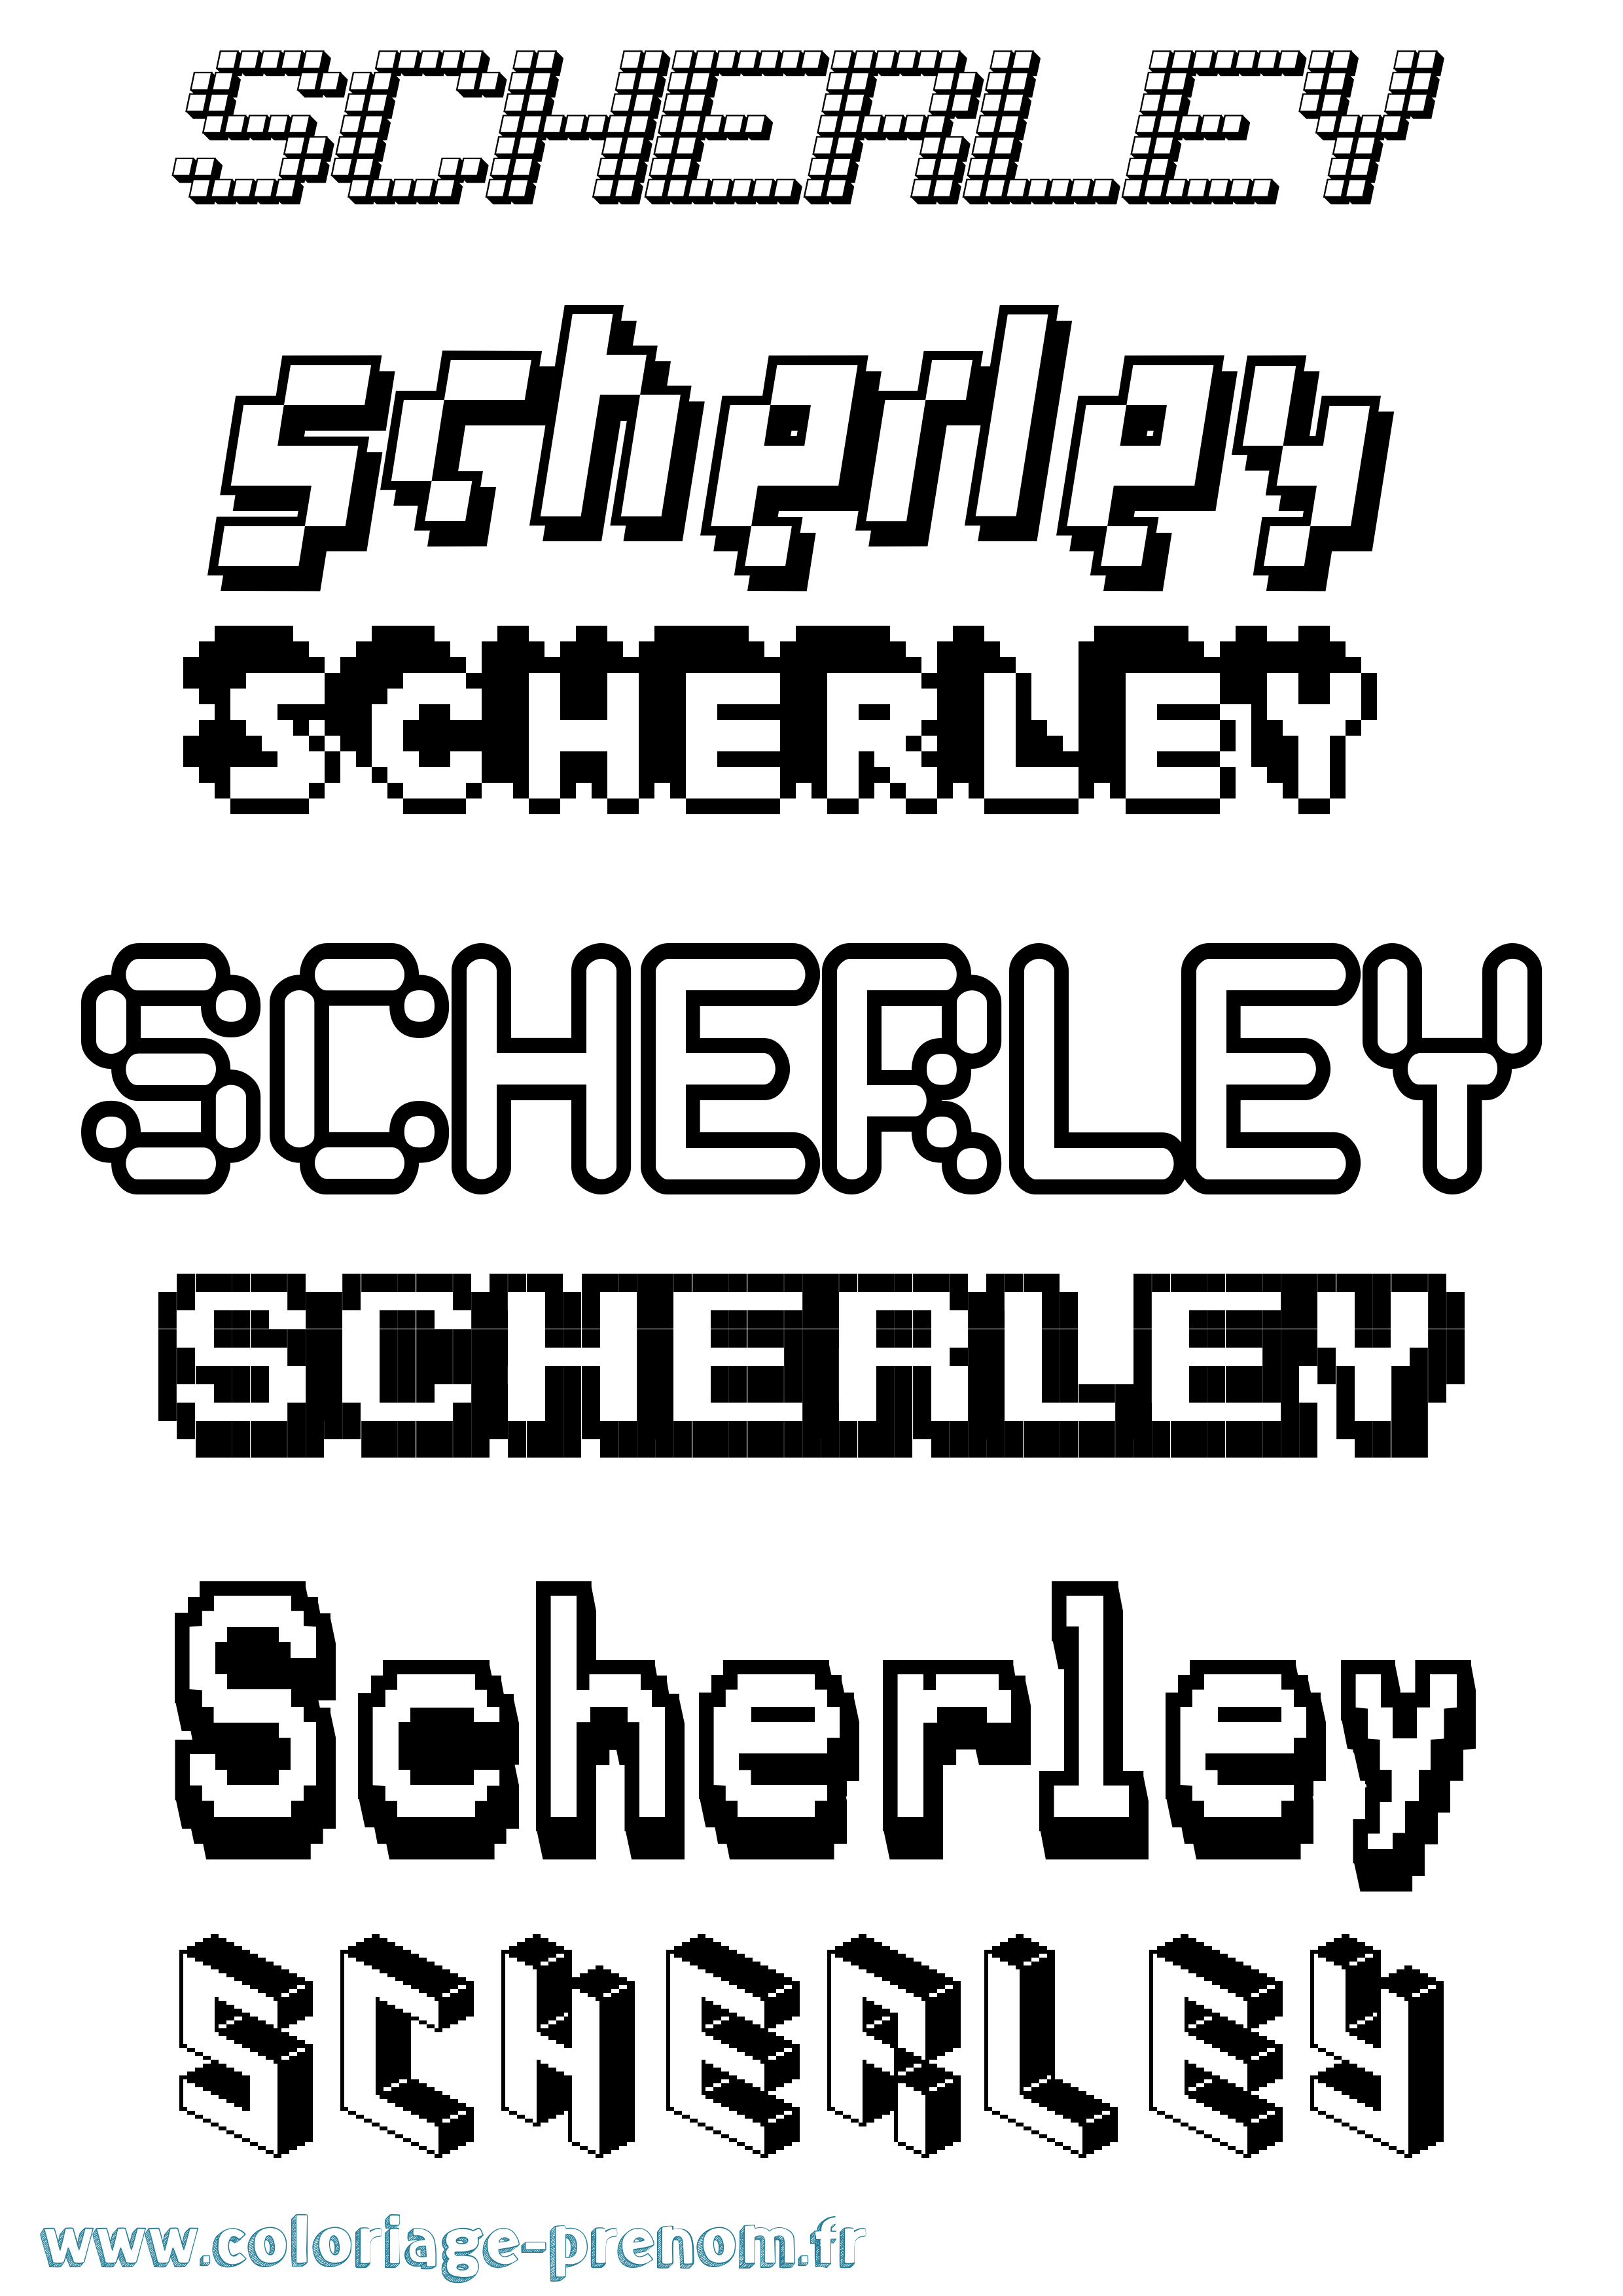 Coloriage prénom Scherley Pixel